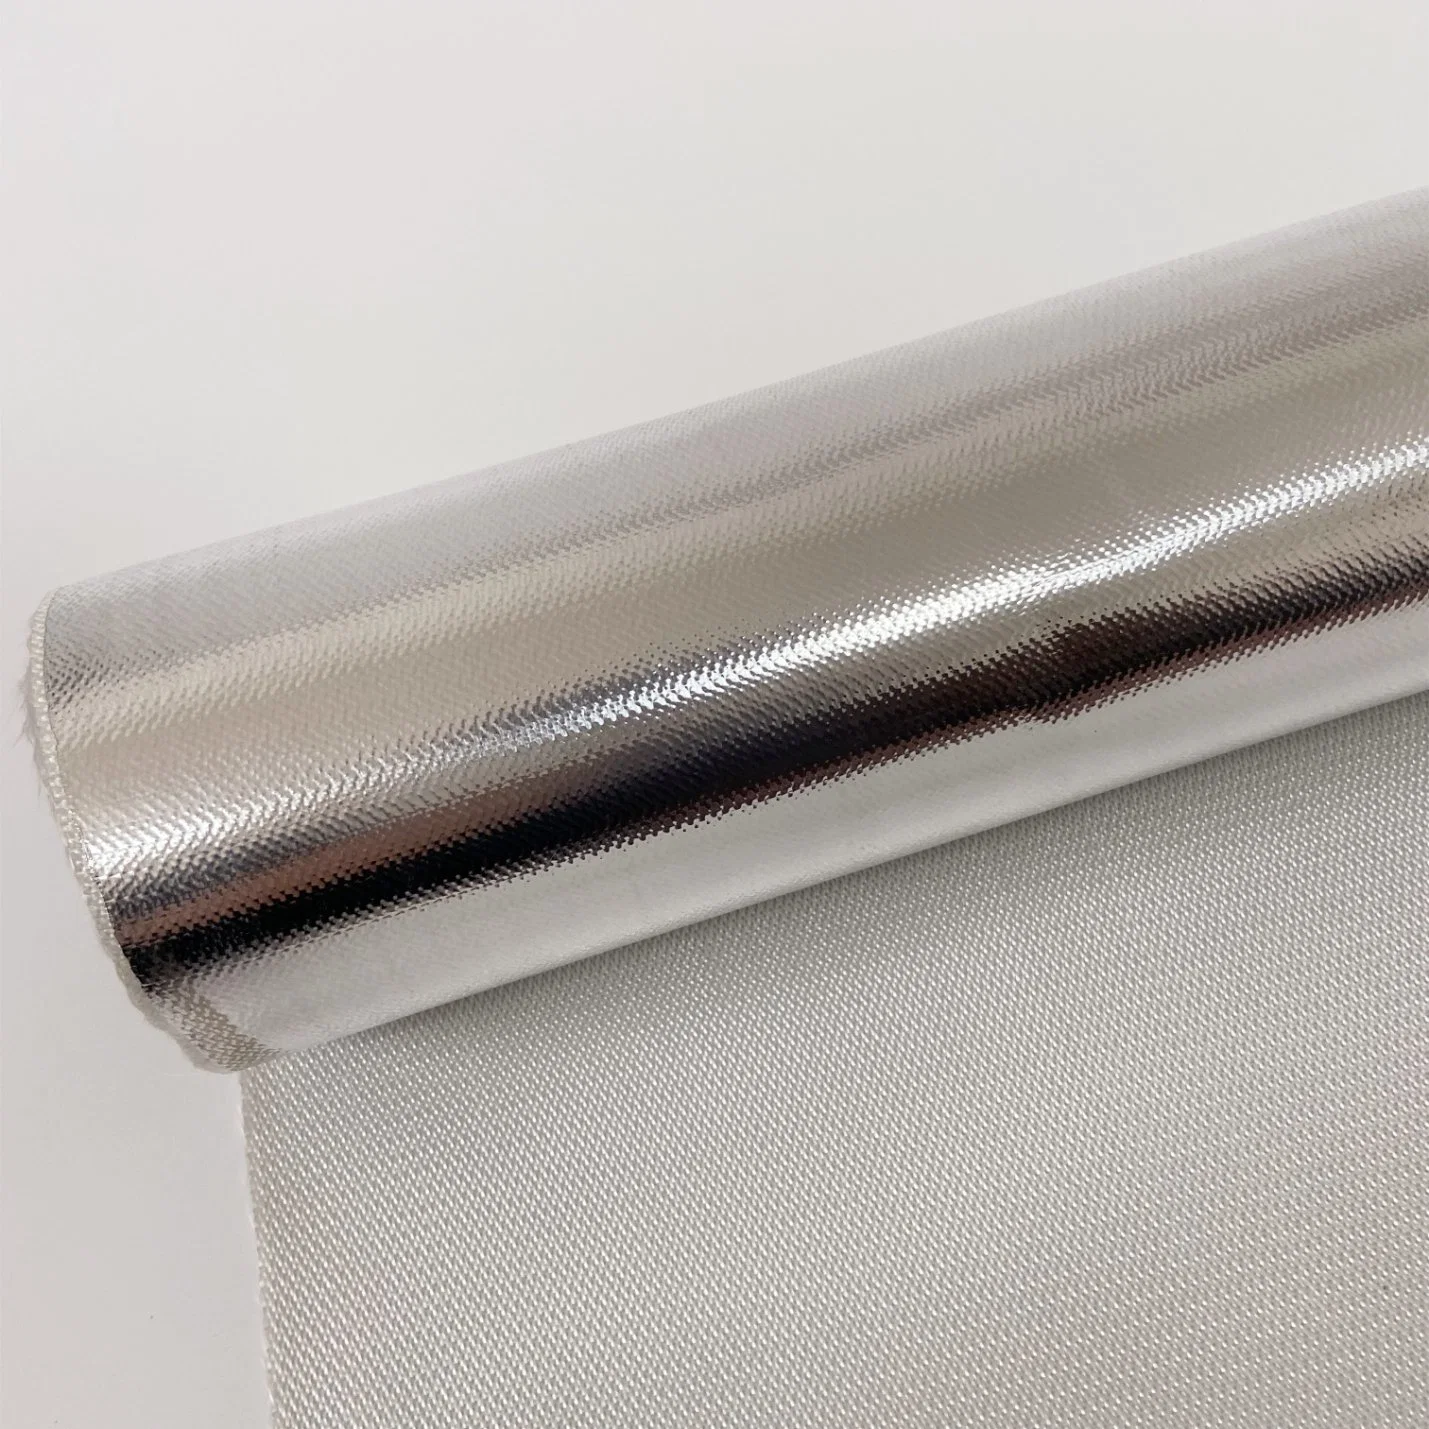 Resistente al agua resistente al calor de la lámina de aluminio plateado de tela de fibra de vidrio laminado ignífugo Textil de aislamiento térmico